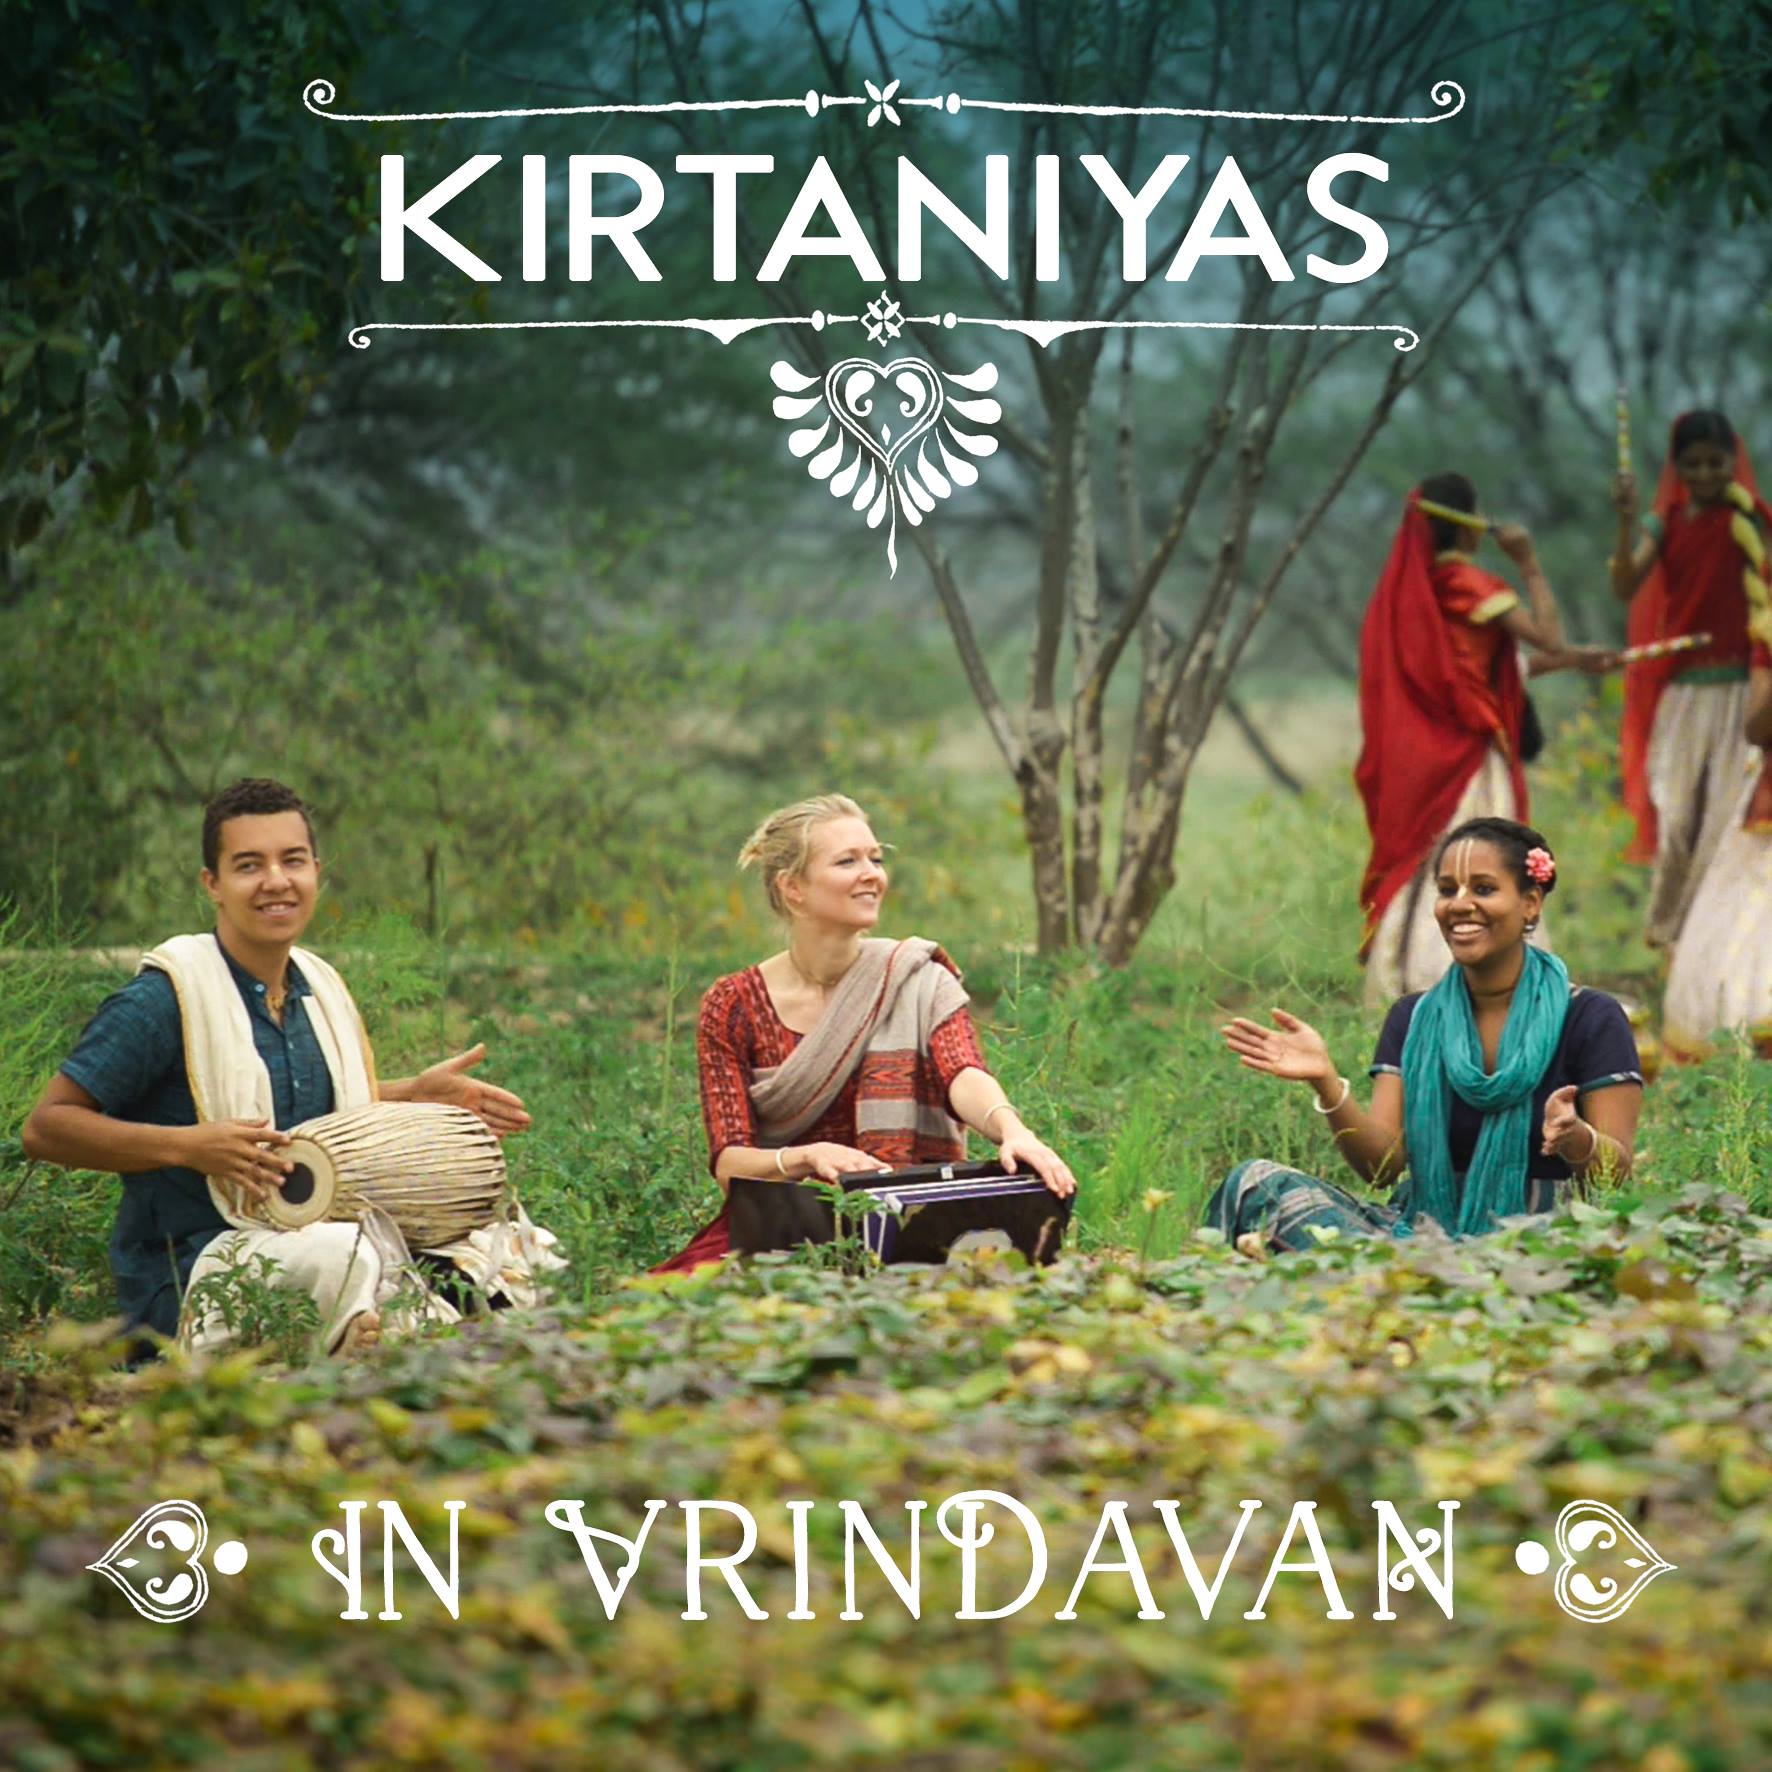 A Conversation with Vijay Krsna of the Kirtaniyas